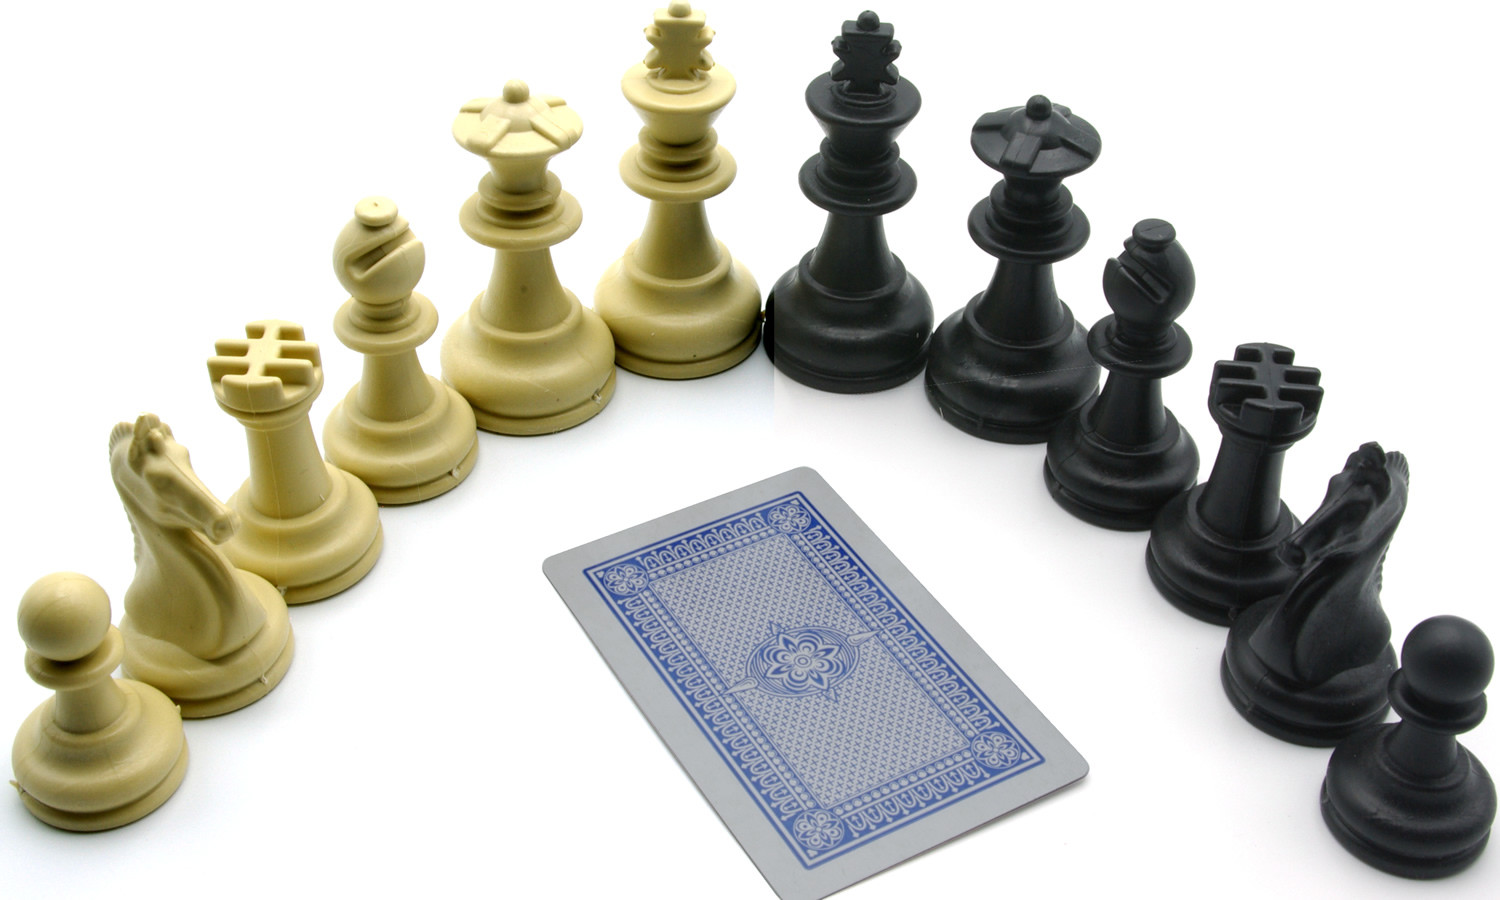 75mm plastic Chess pieces / Chessmen